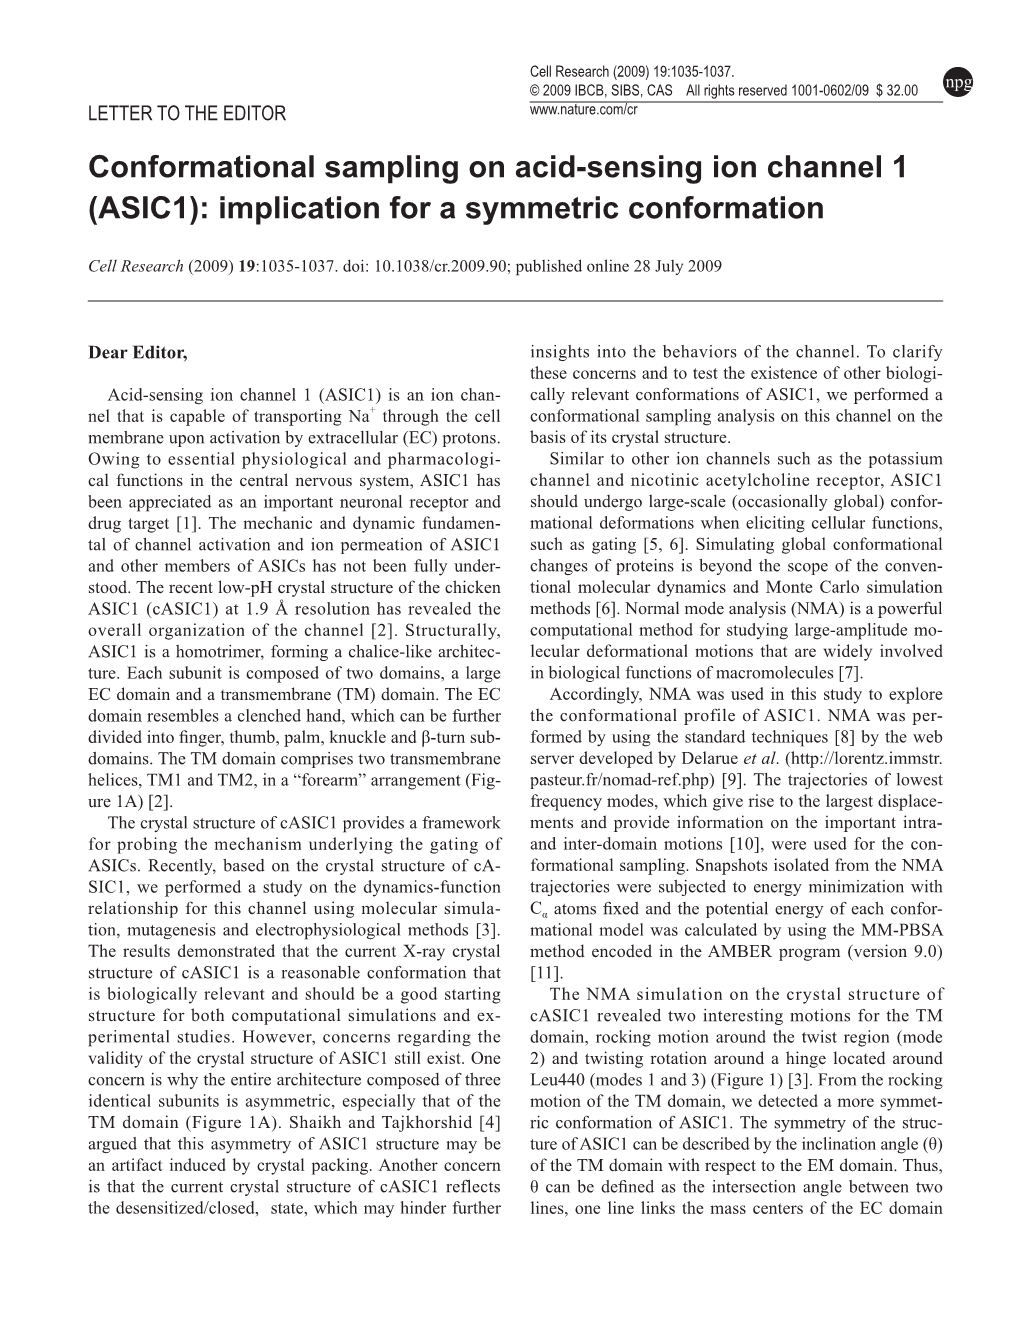 Conformational Sampling on Acid-Sensing Ion Channel 1 (ASIC1): Implication for a Symmetric Conformation